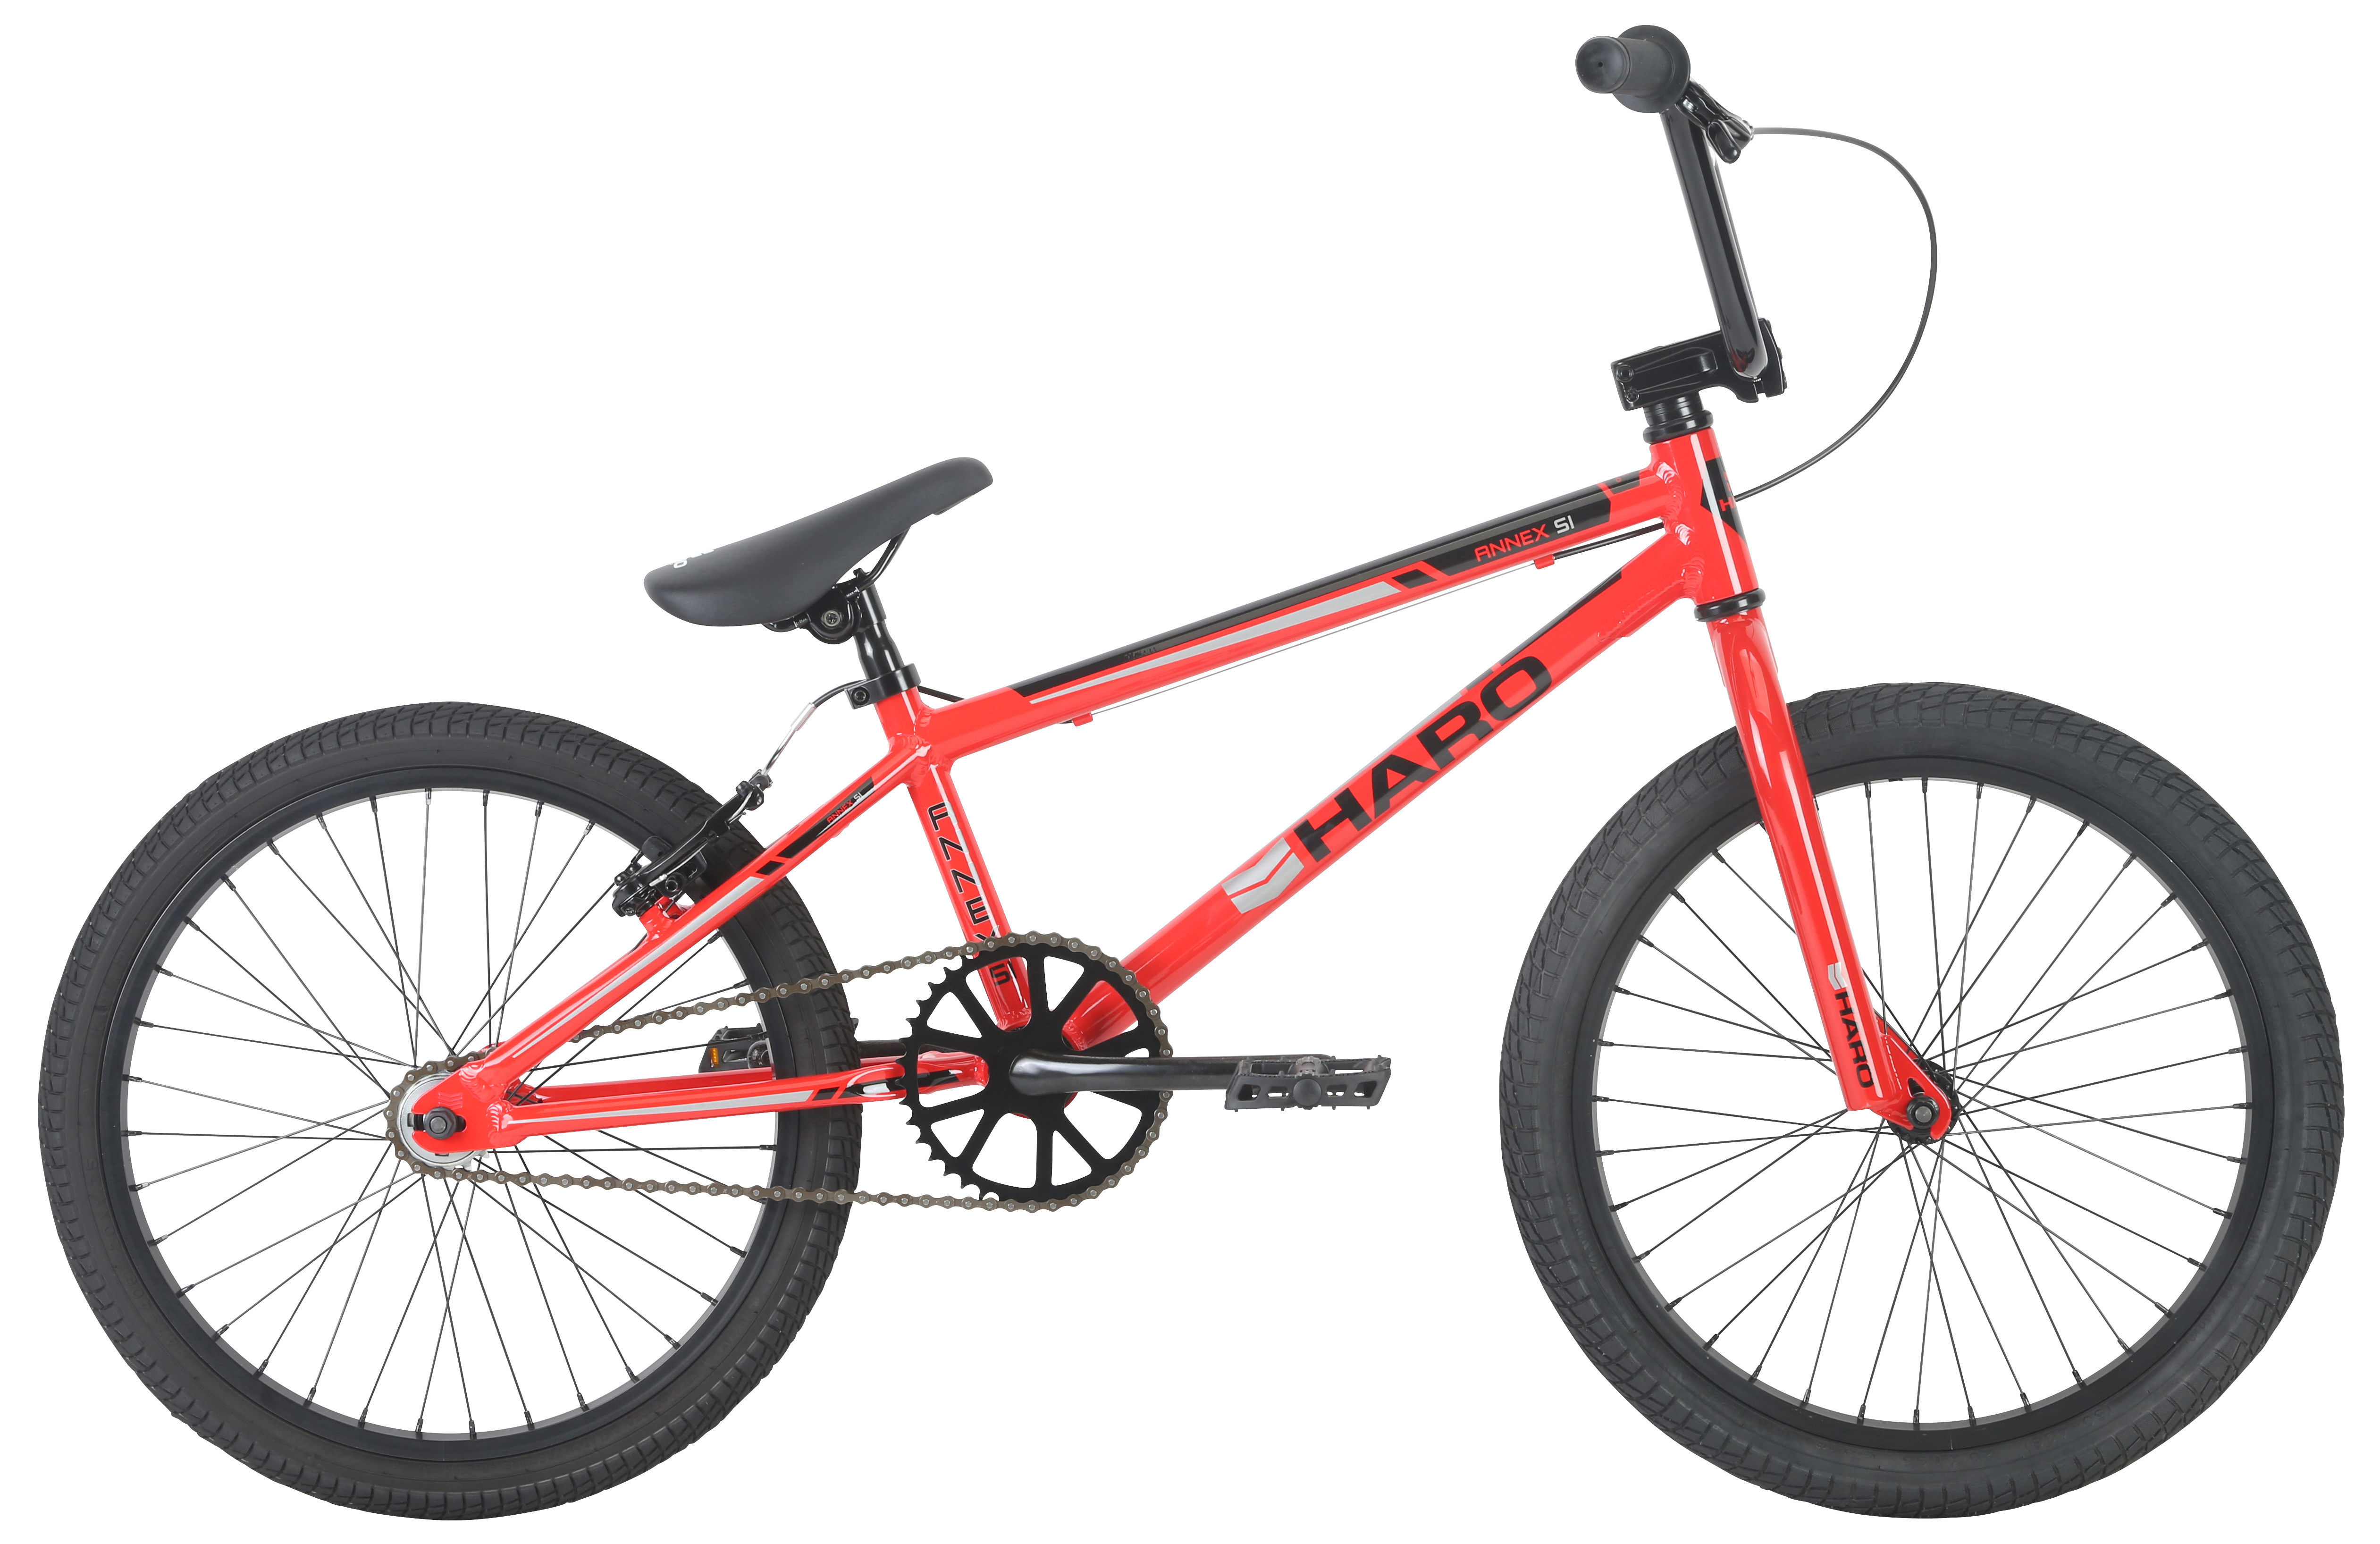  Отзывы о Велосипеде BMX Haro Annex Si Alloy 2019